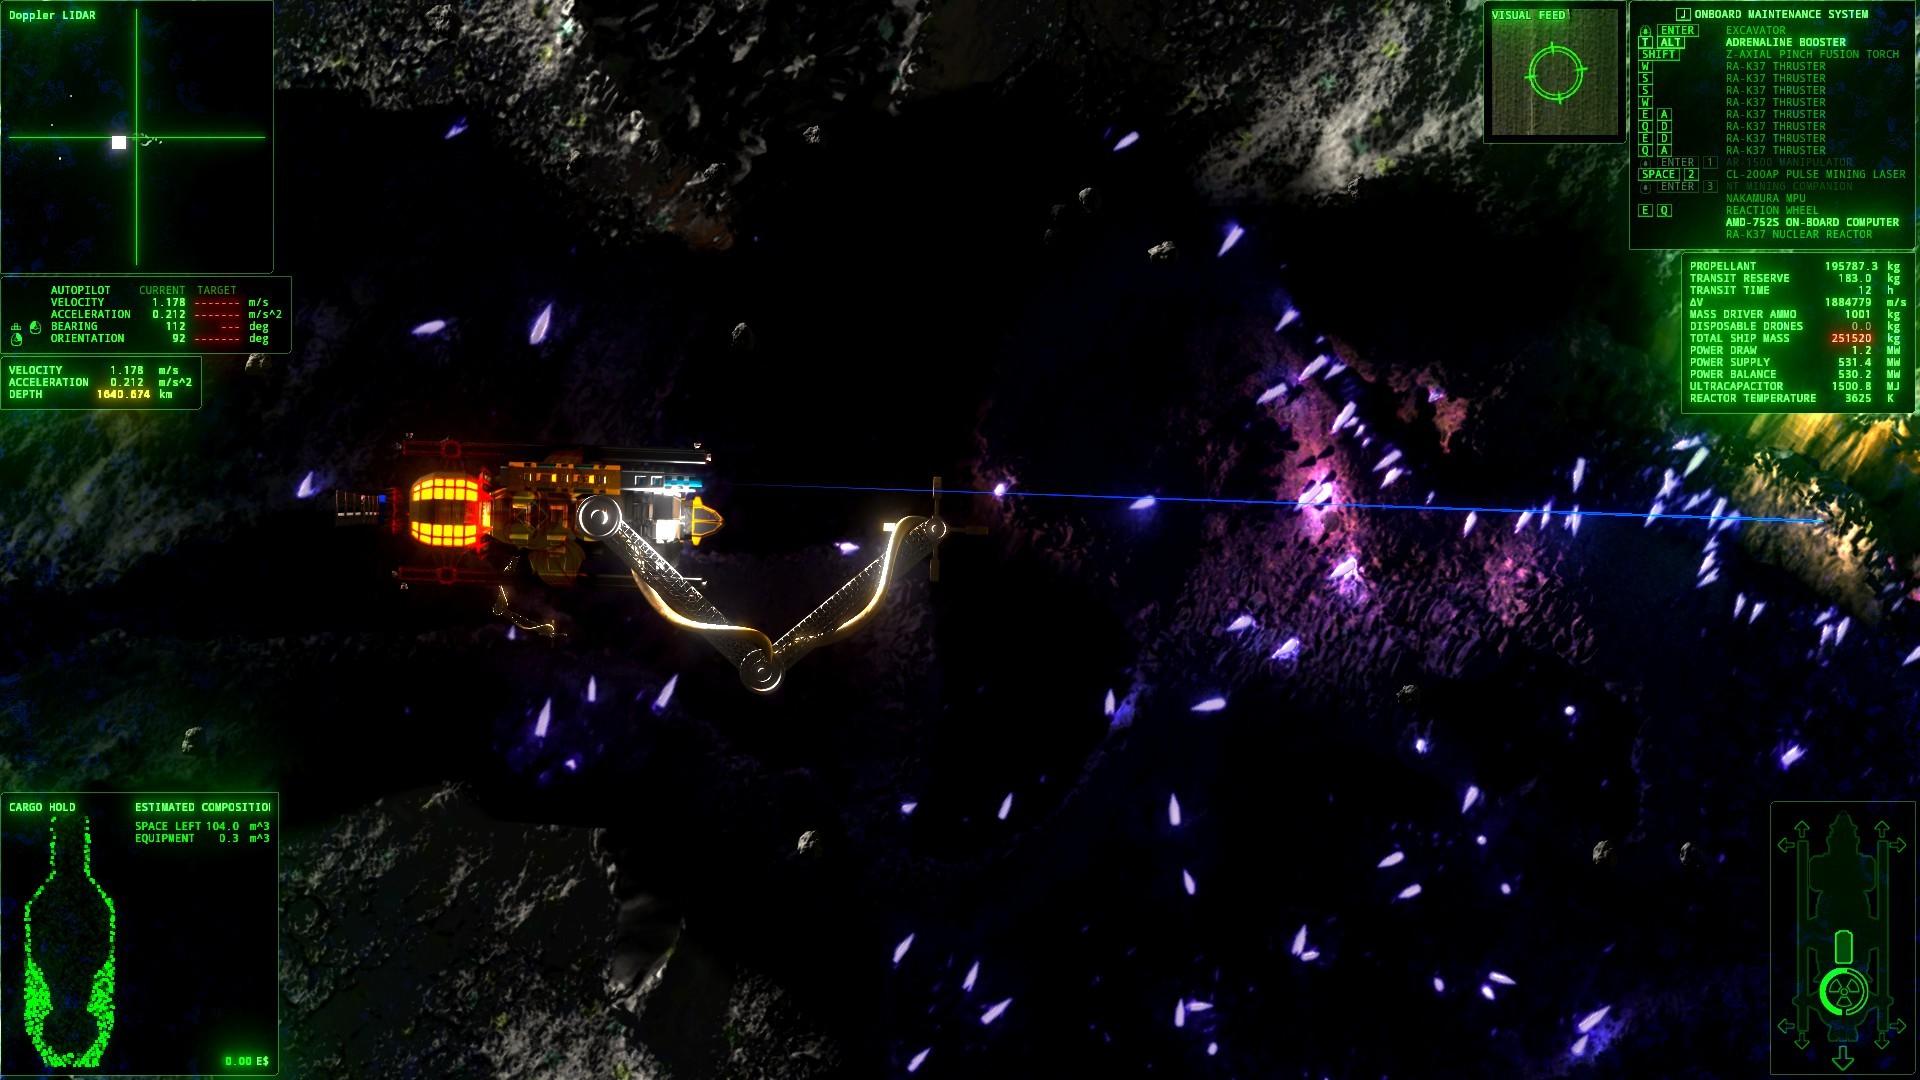 Screenshot №3 from game ΔV: Rings of Saturn